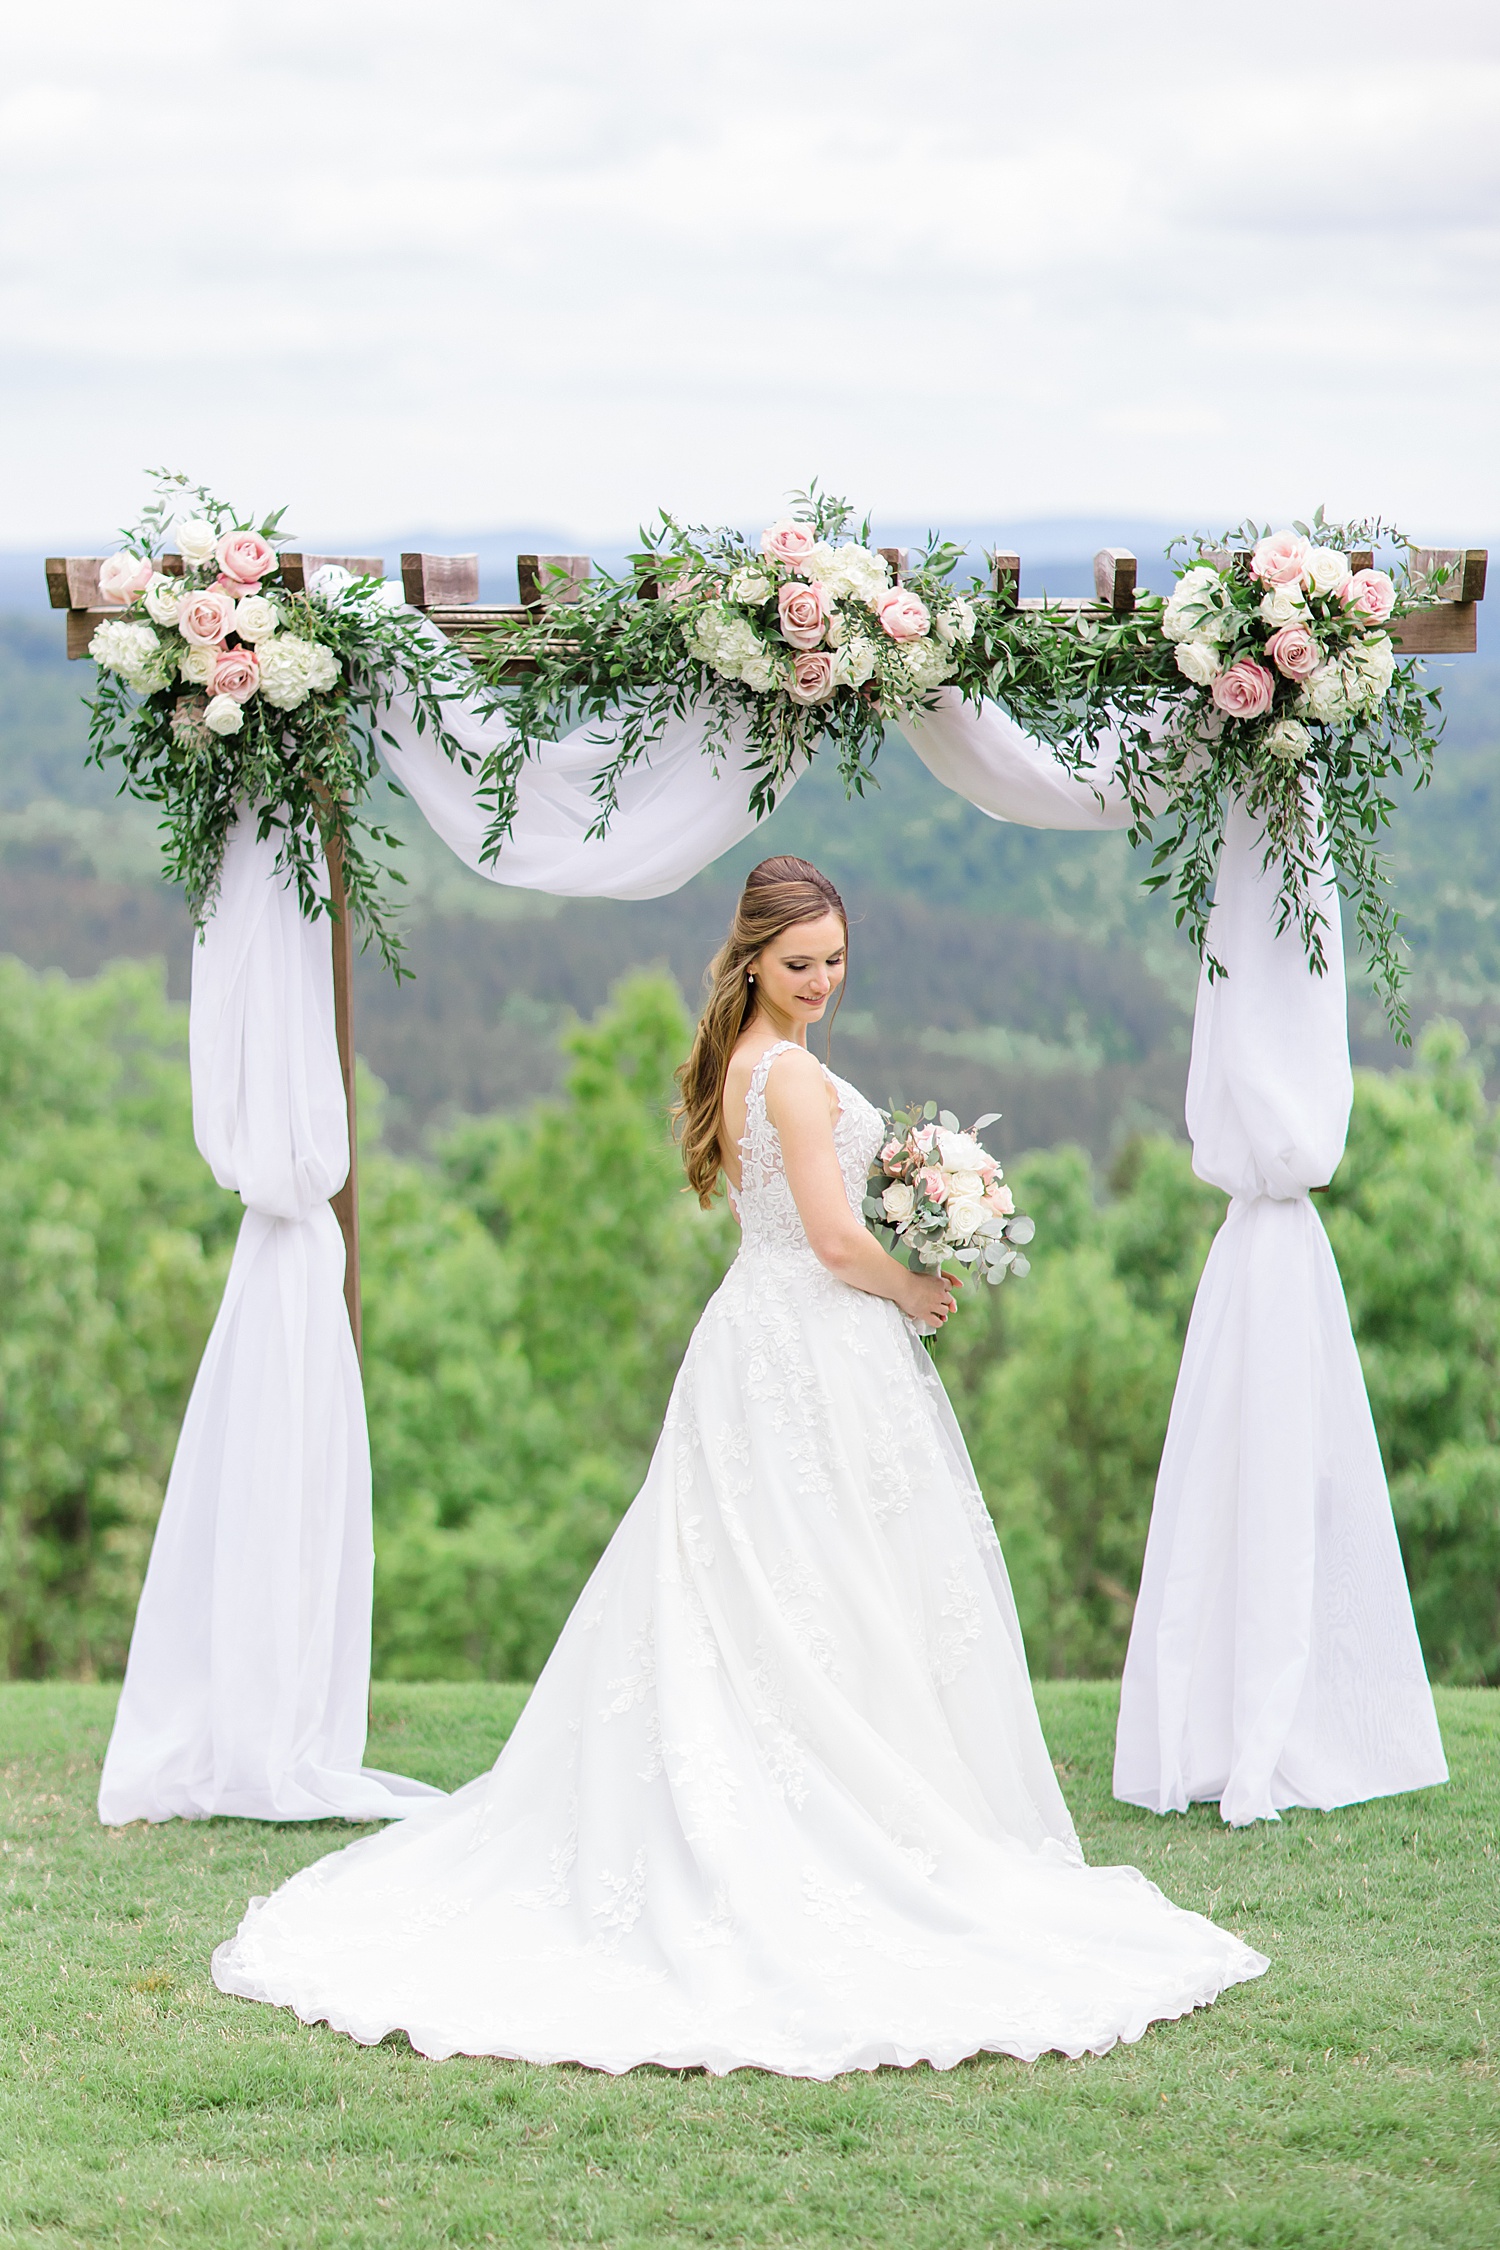 gorgeous classic wedding flowers decorate wedding arch 